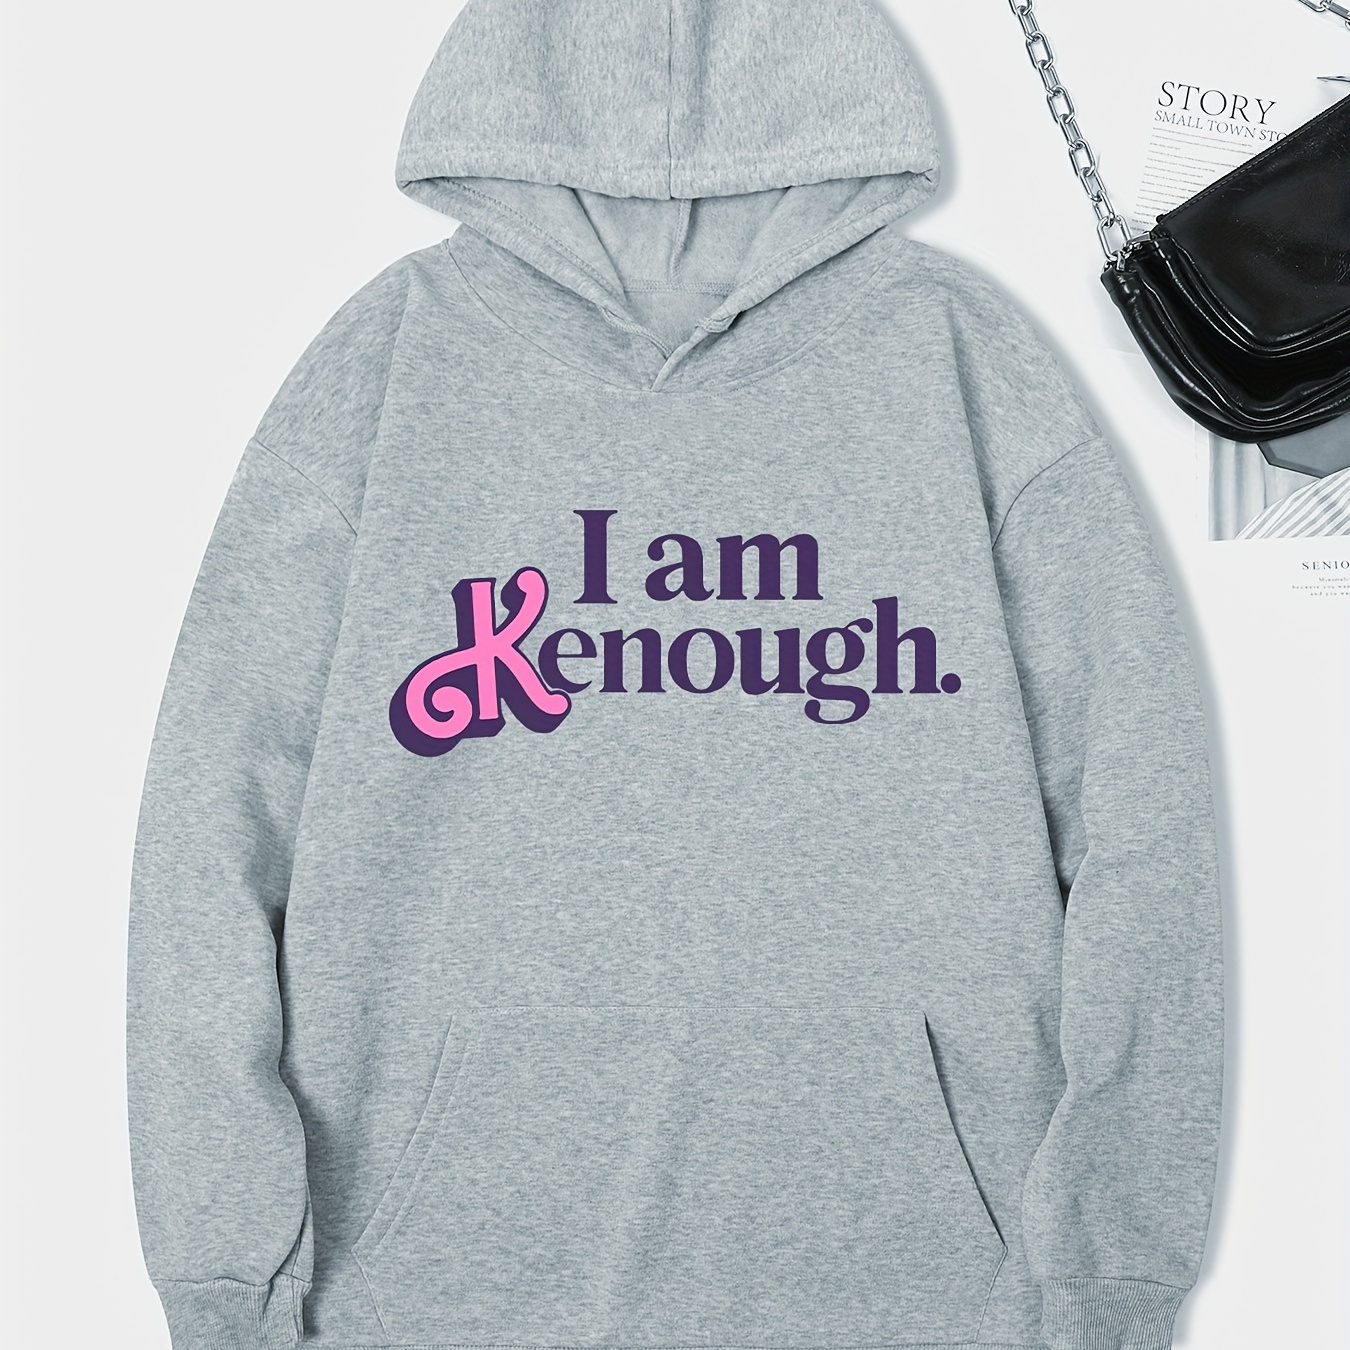 

I Am Kenough Print Hoodie, Drawstring Casual Hooded Sweatshirt For Winter & Fall, Women's Clothing